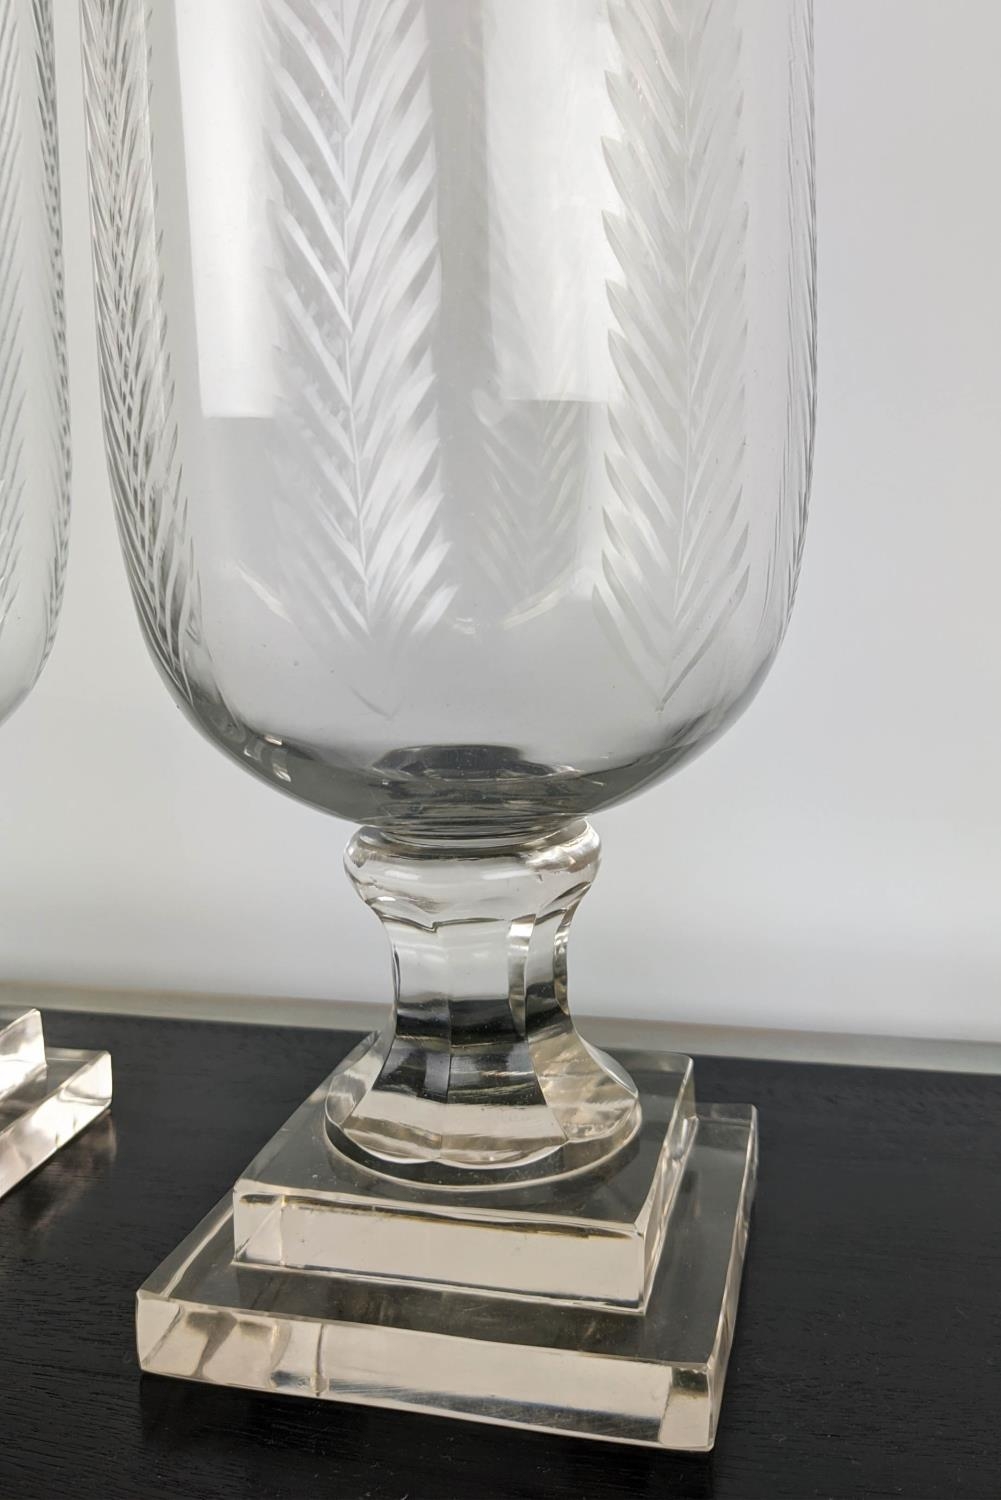 HURRICANE LANTERNS, a pair, cut glass, 39.5cm x 14.5cm diam. (2) - Image 3 of 4